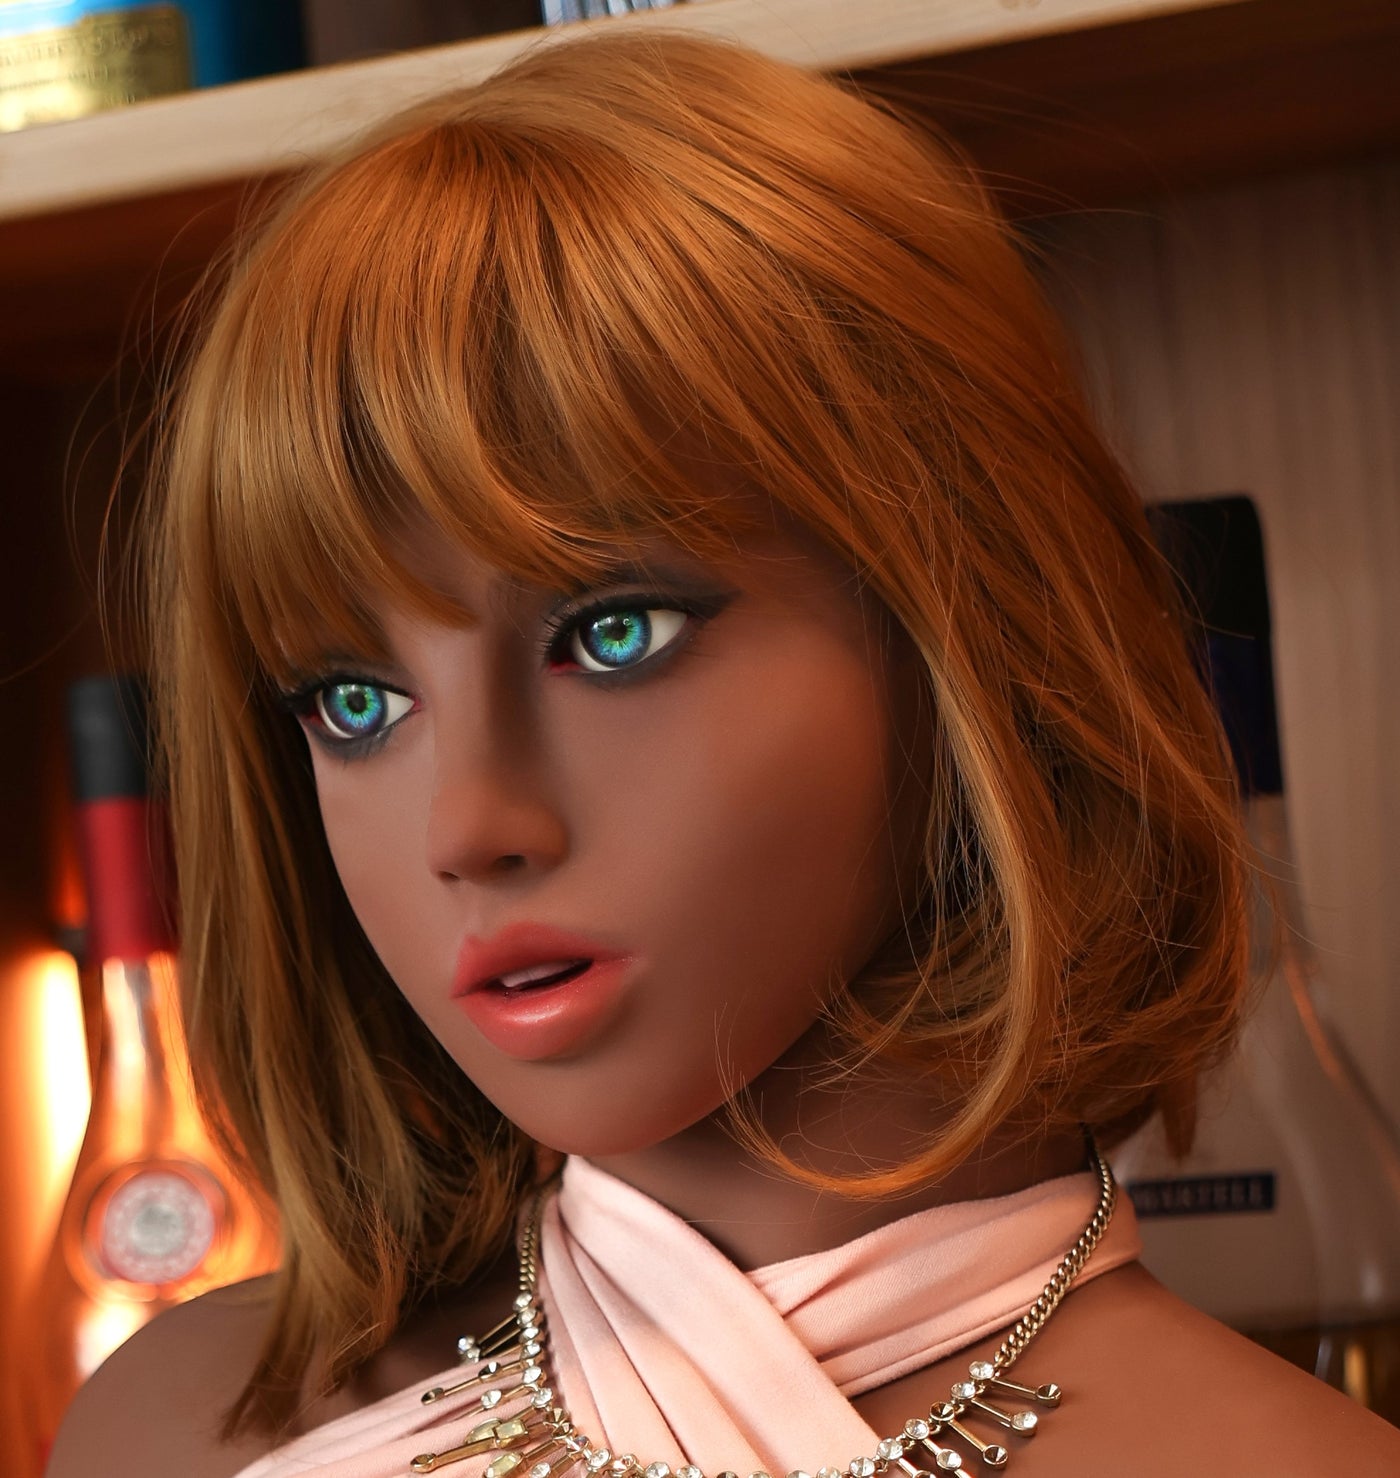 Neodoll Girlfriend - Mara - Sex Doll Head - Black